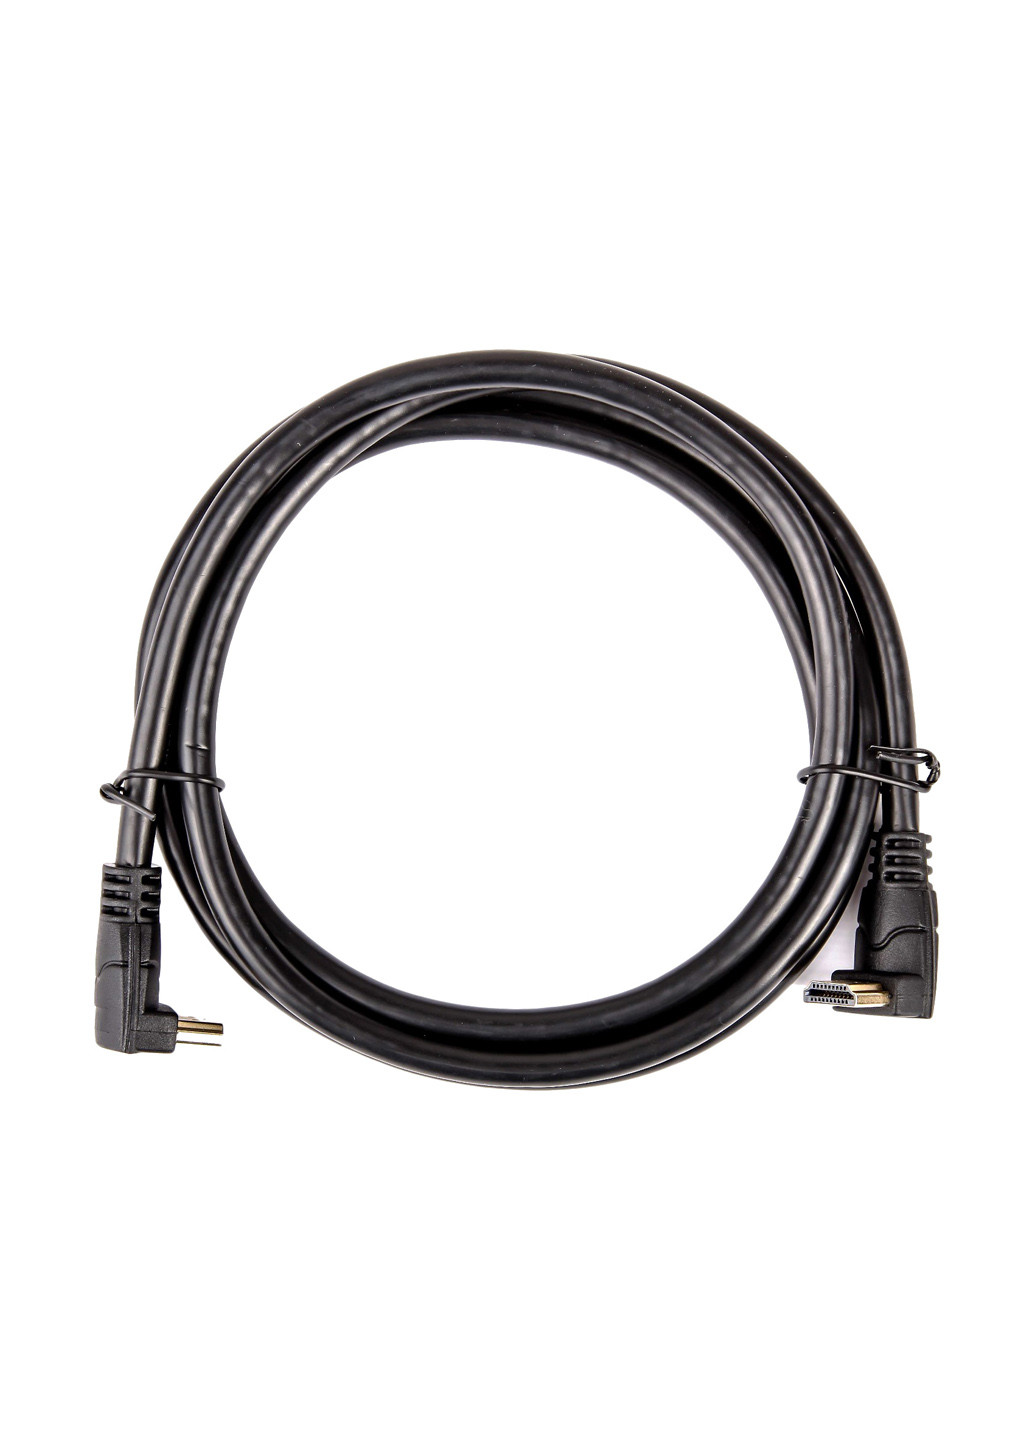 Кабель HDMI 1.4 v, 2 м (60020) CHARMOUNT кабель charmount hdmi 1.4 v, 2 м (60020) (145607413)